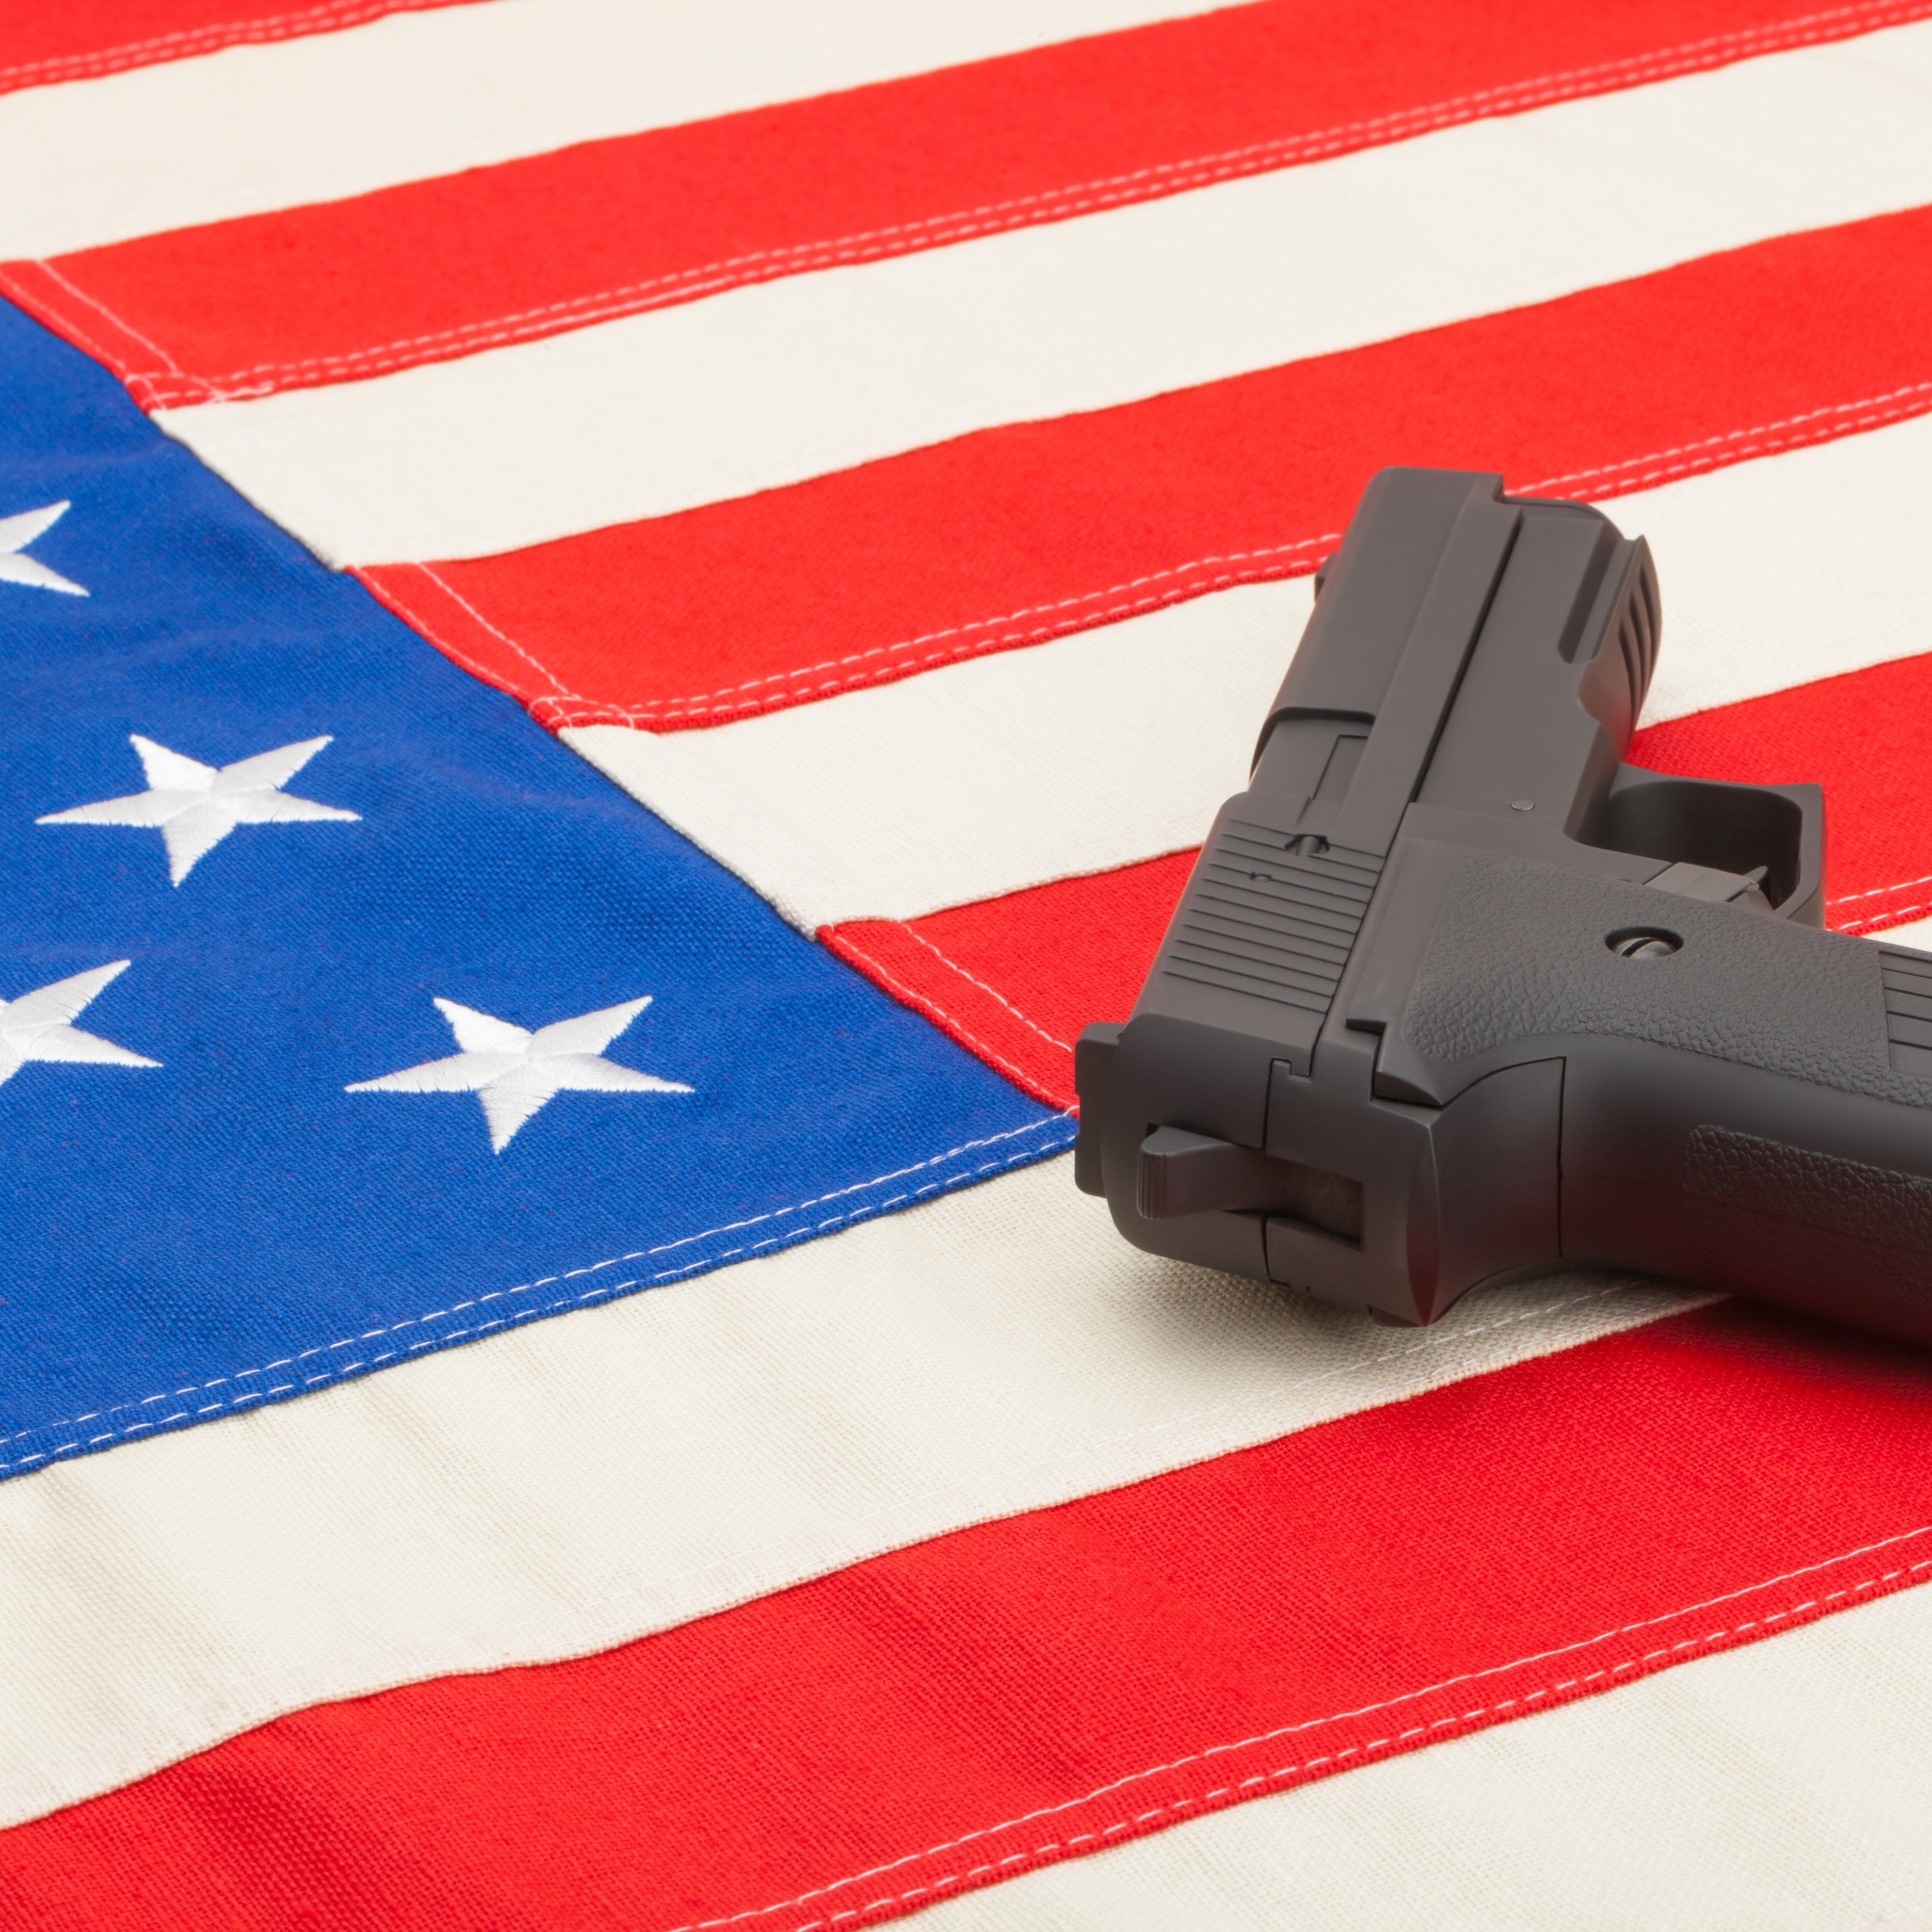 Handgun over US flag - studio shoot